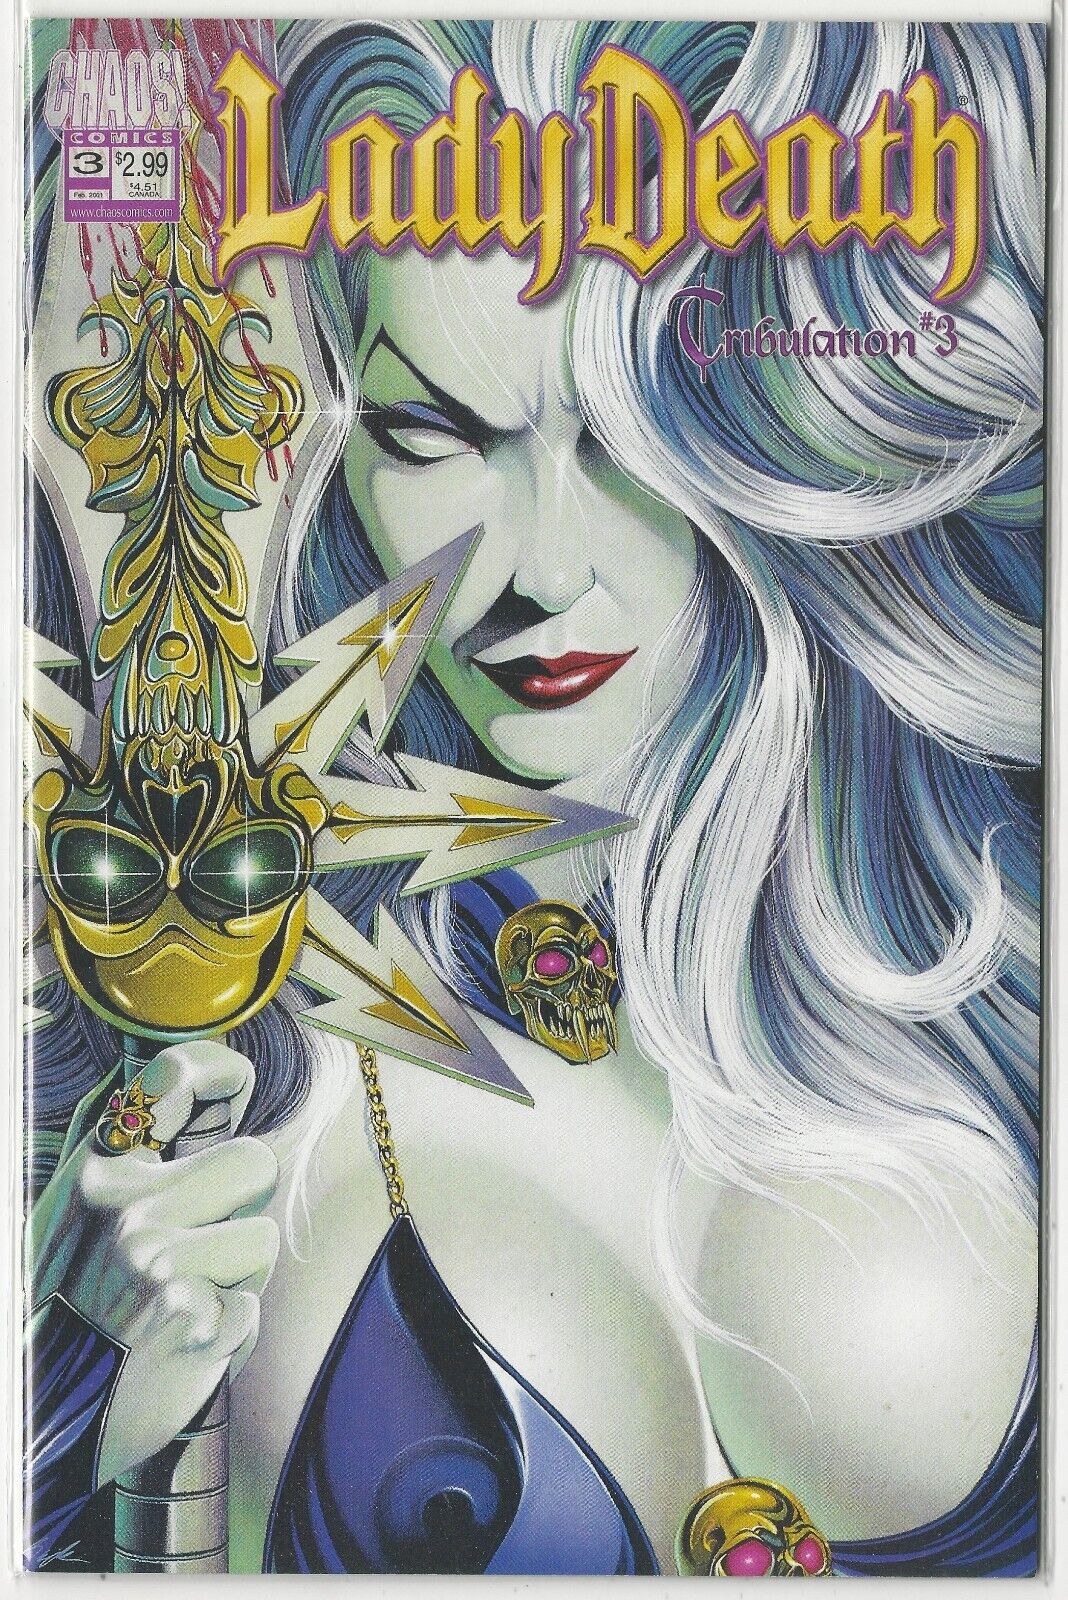 2001 Choas Comics - Lady Death Tribulation # 3 - High Grade Copy